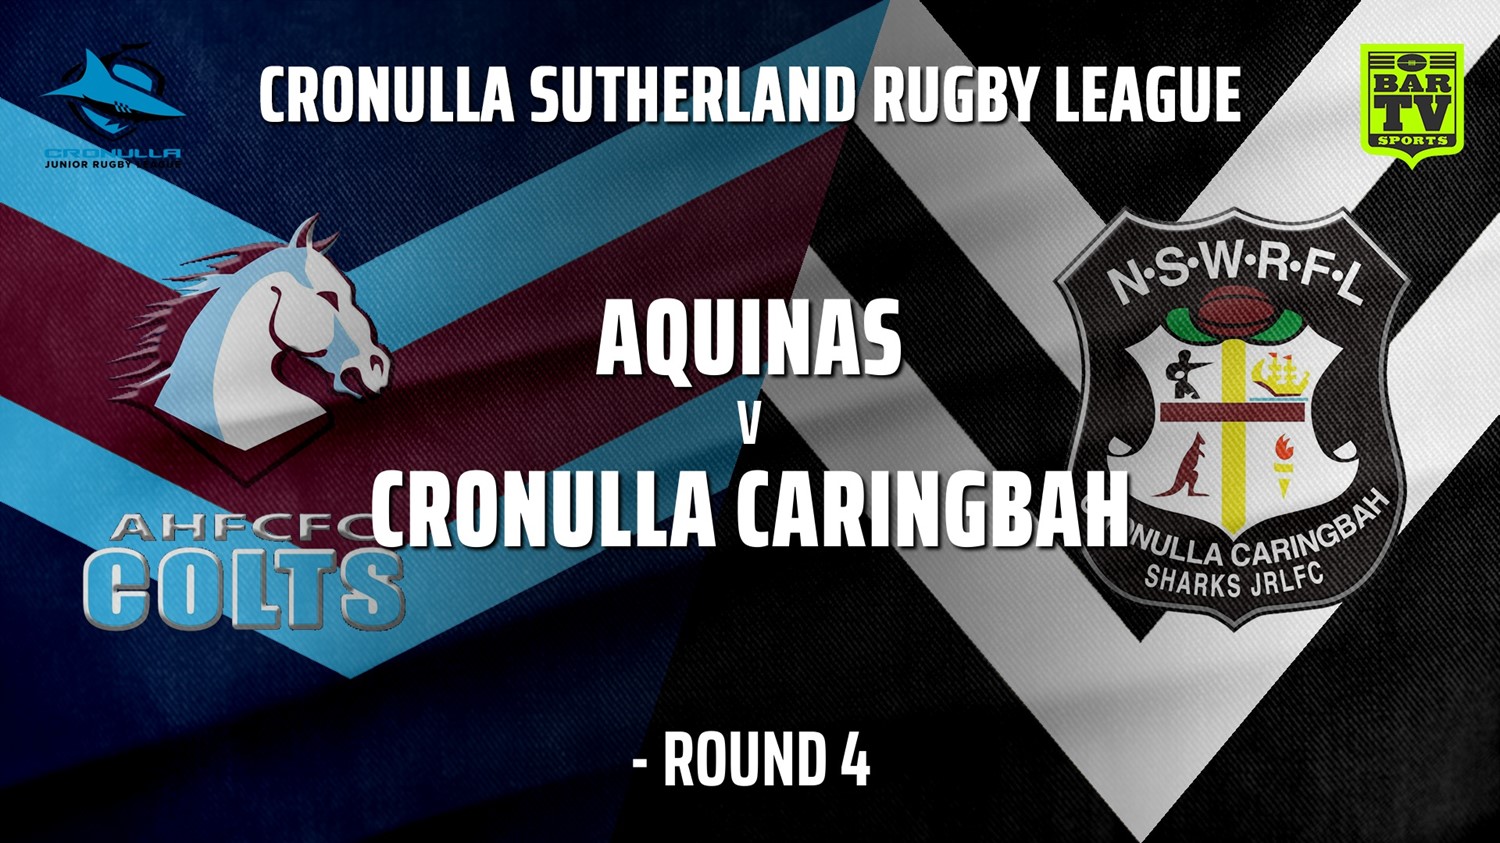 210523-Cronulla JRL Under 20s Round 4 - Aquinas Colts v Cronulla Caringbah Minigame Slate Image